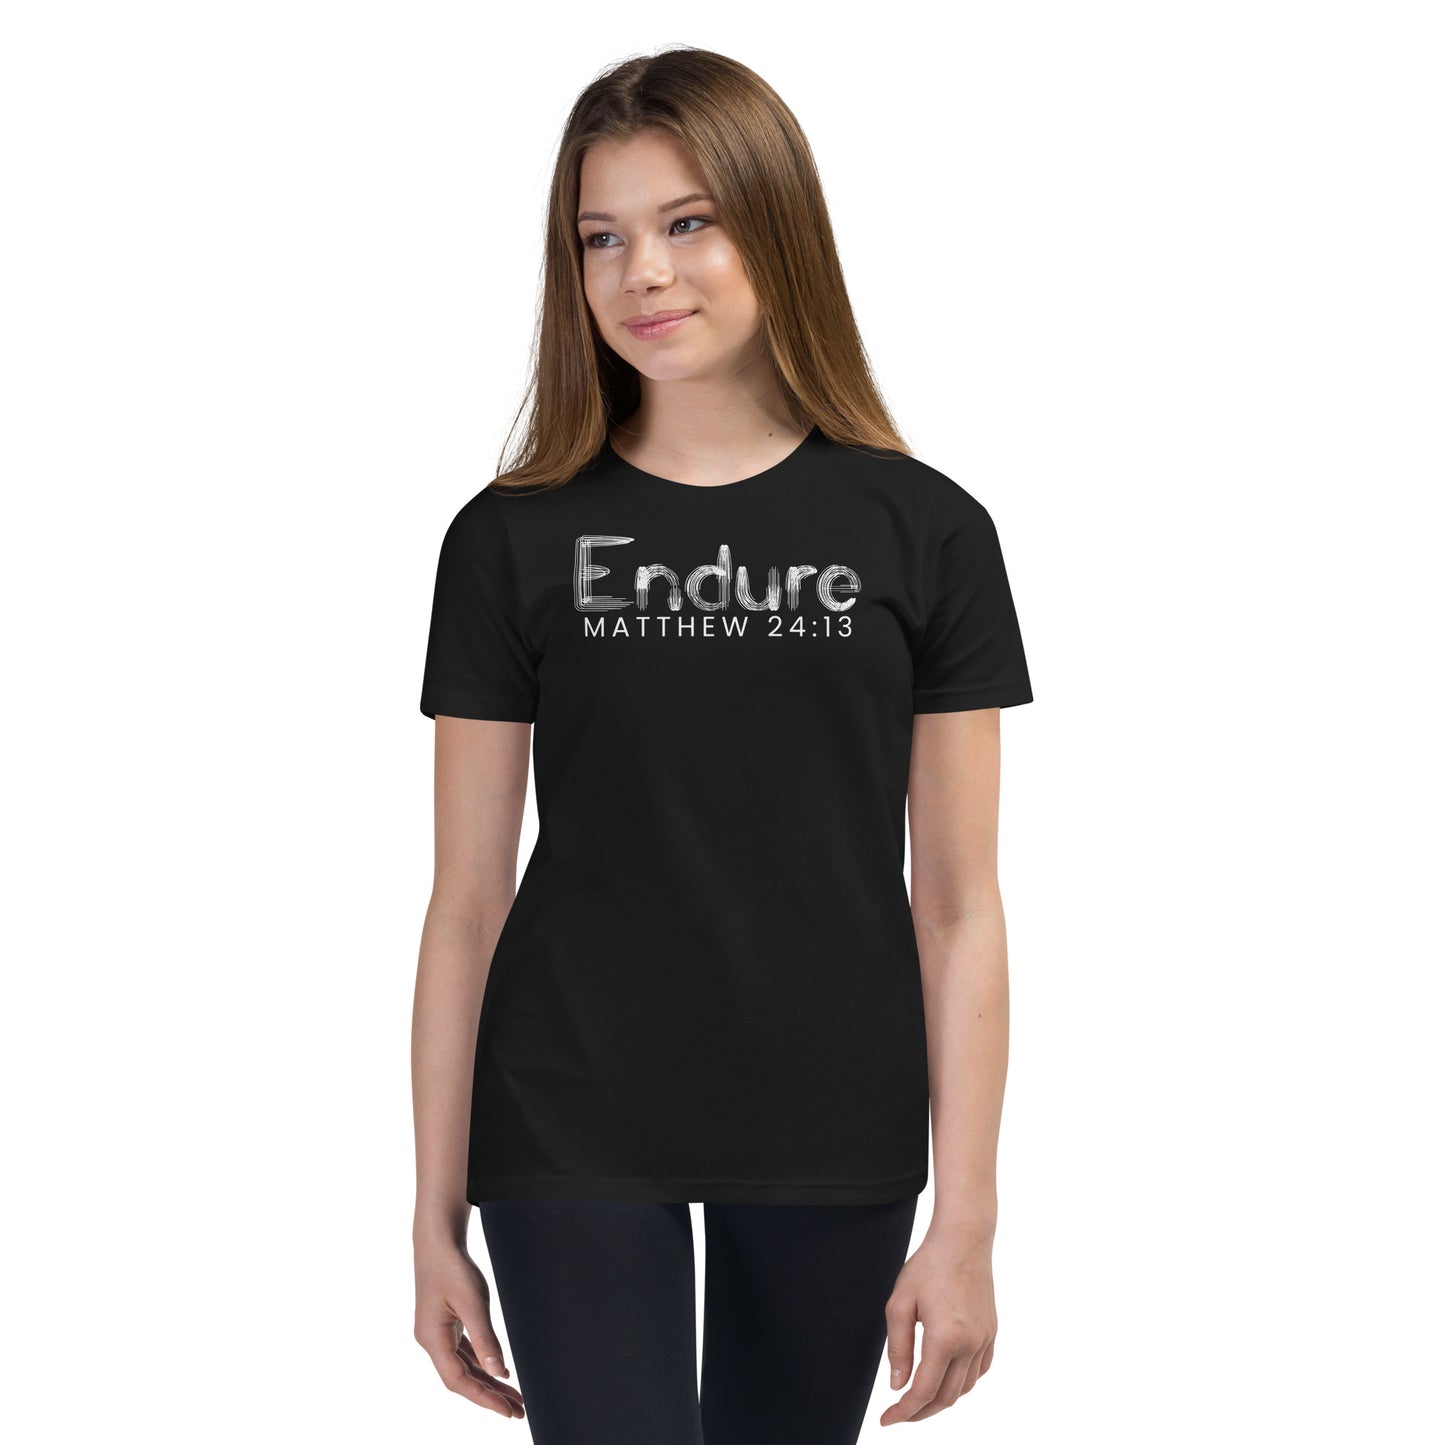 Endure Youth T-Shirt